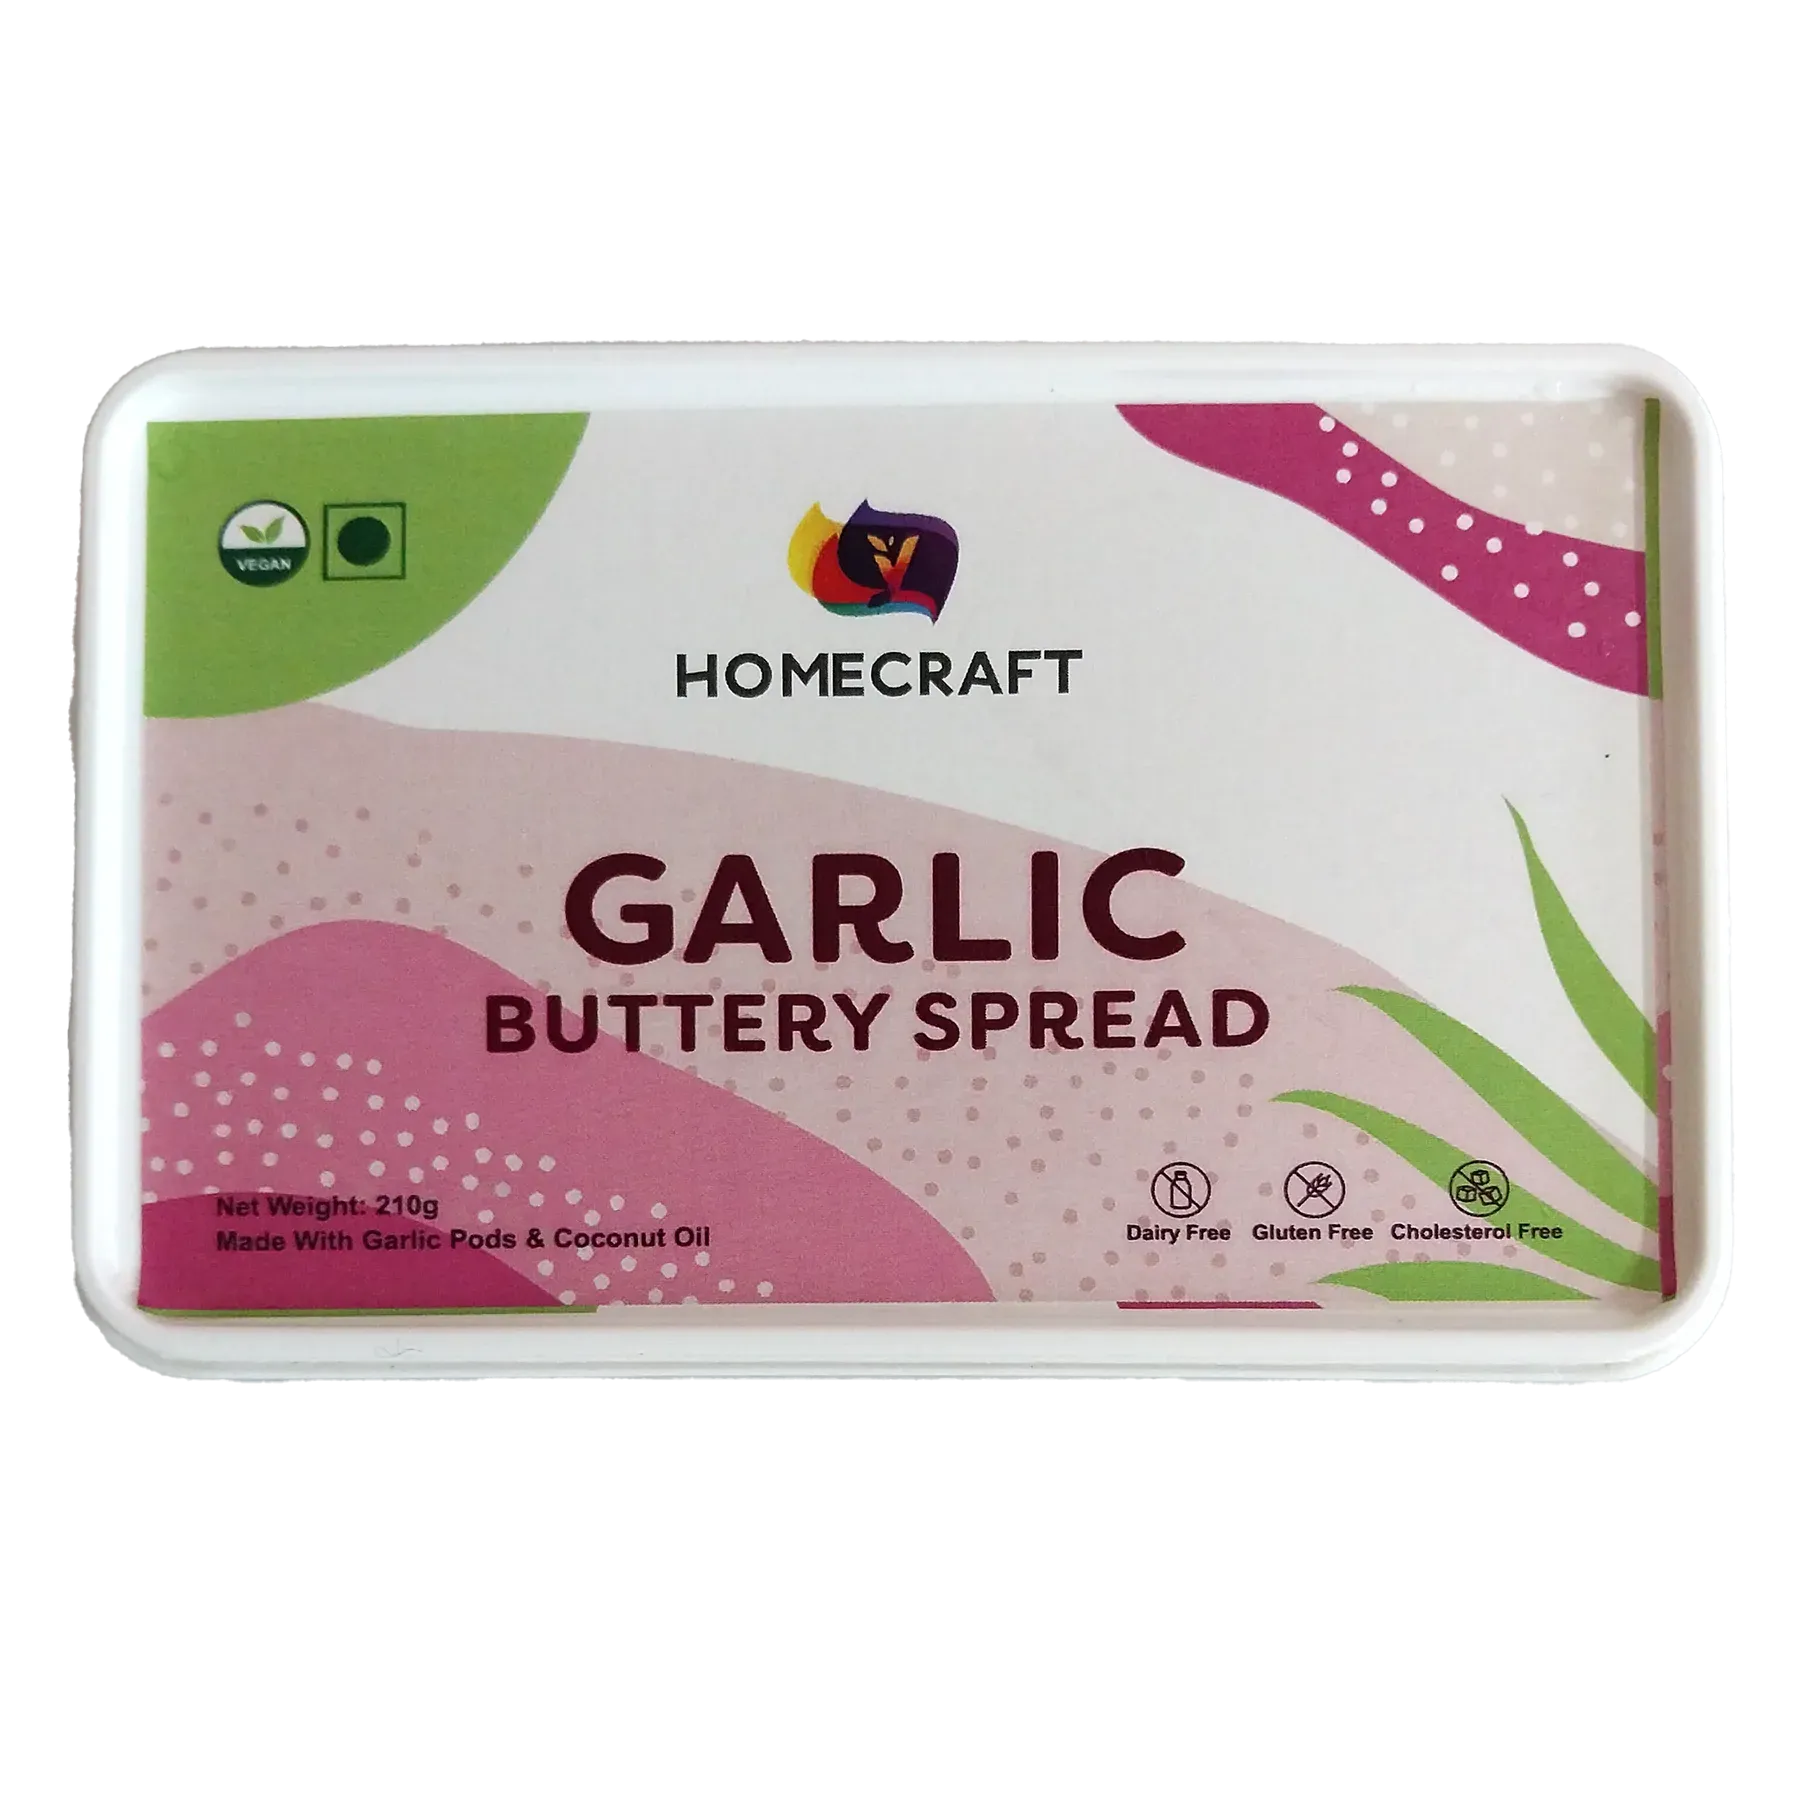 Homecraft Garlic Buttery Spread Image